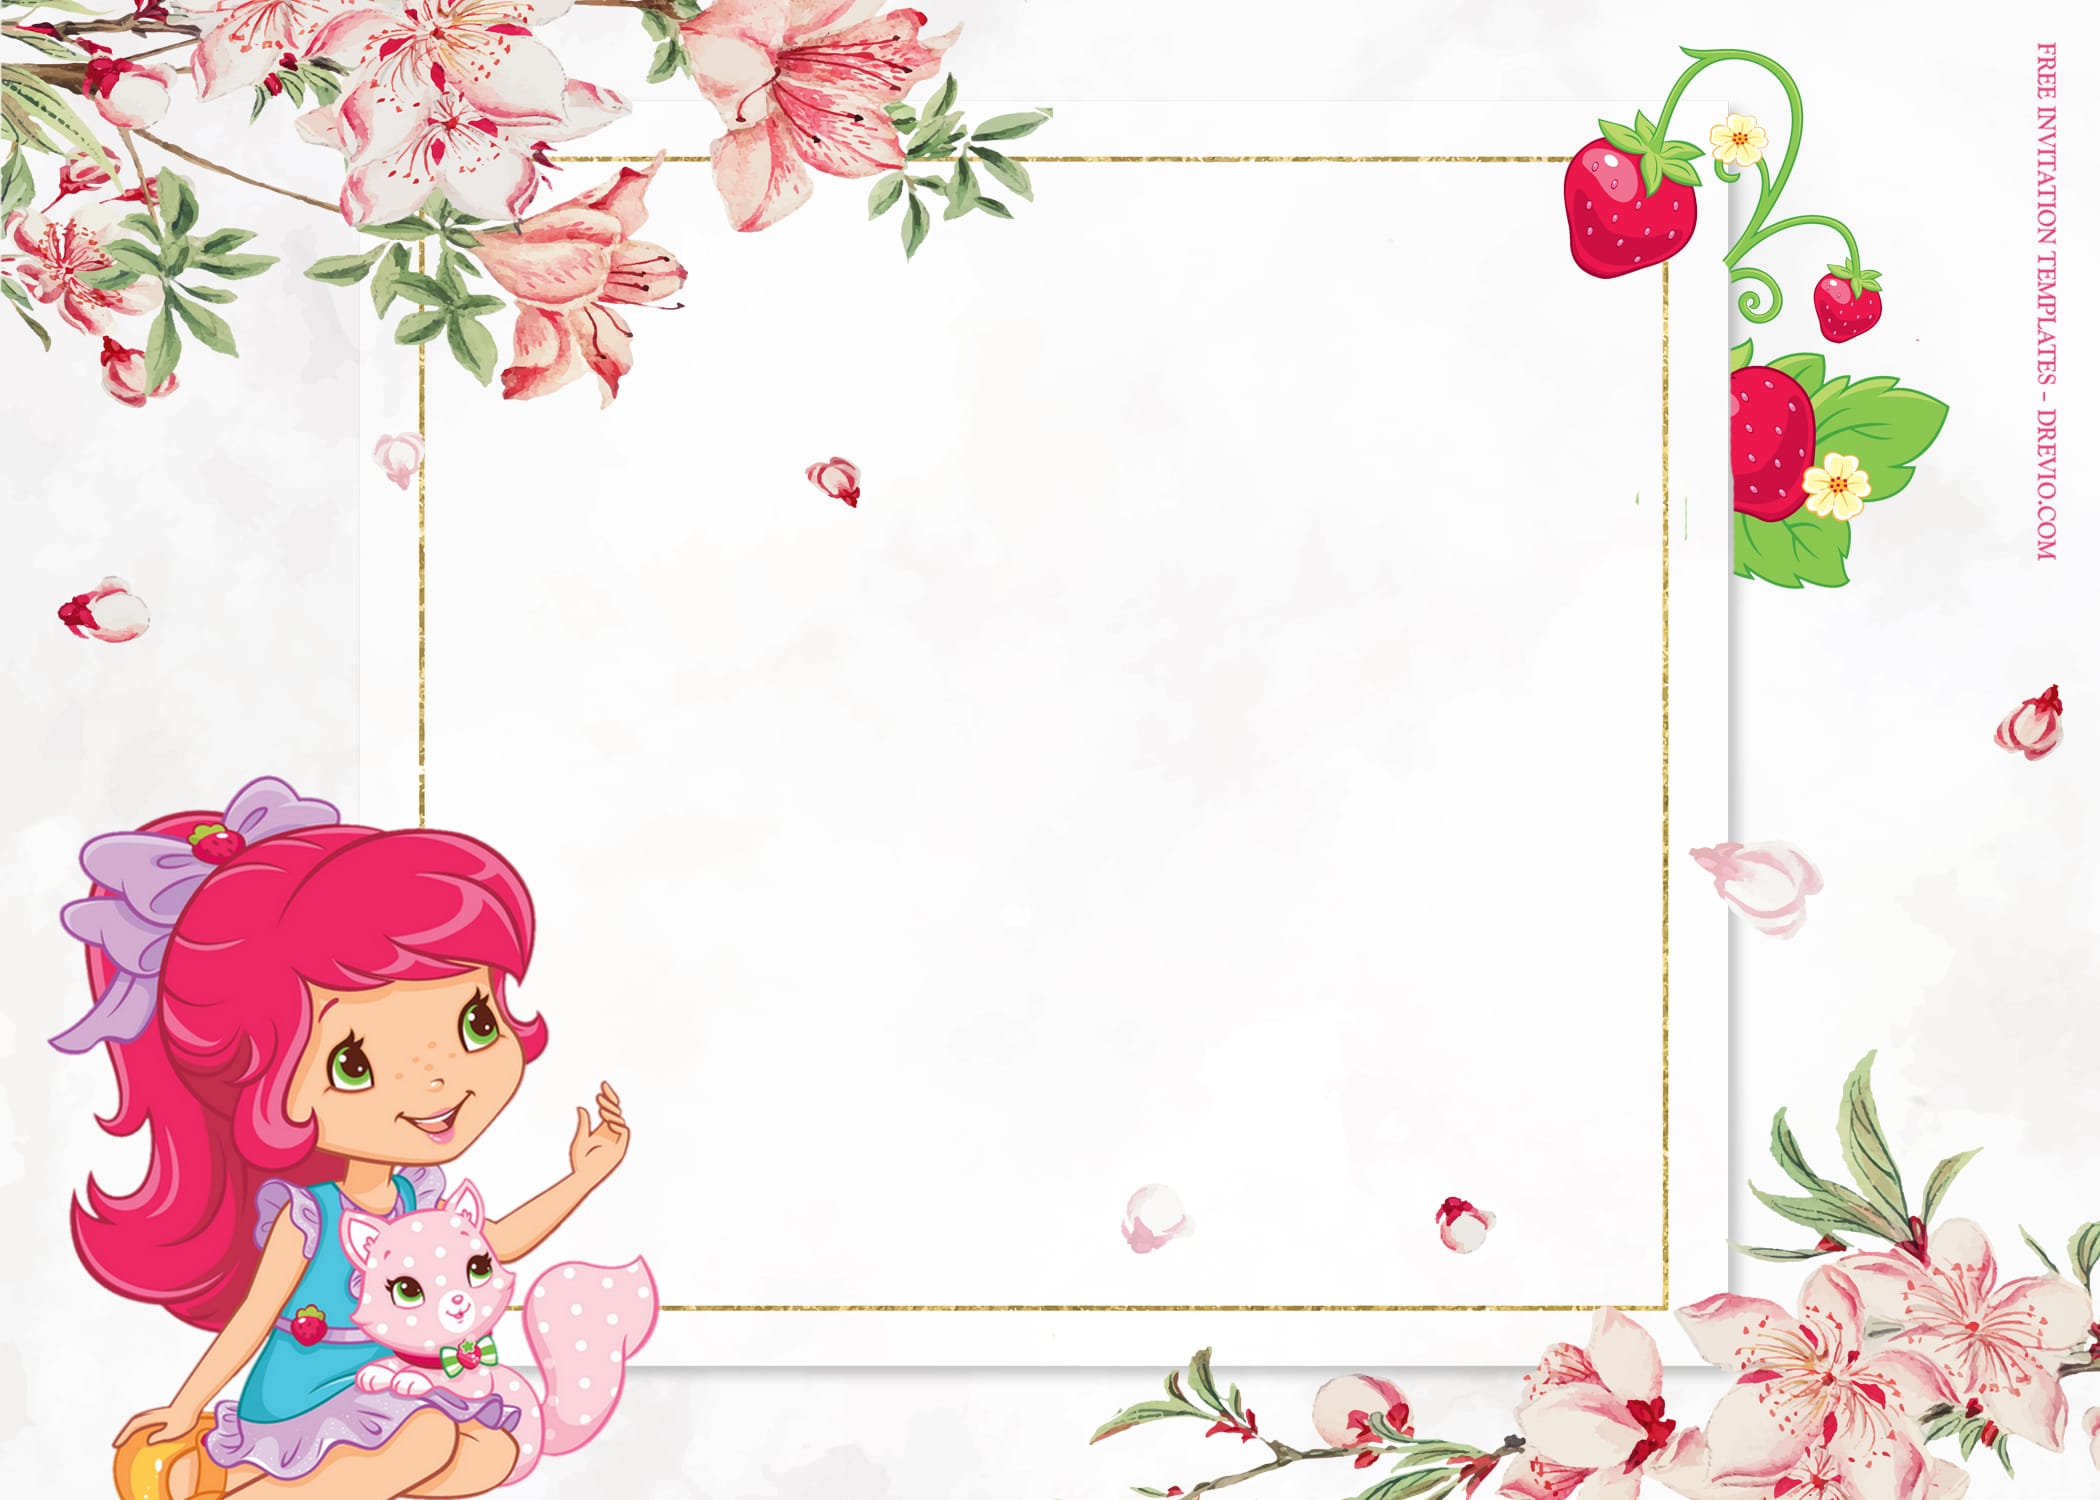 8+ Strawberry Shortcake With Sakura Blossom Birthday Invitation Templates Type Five